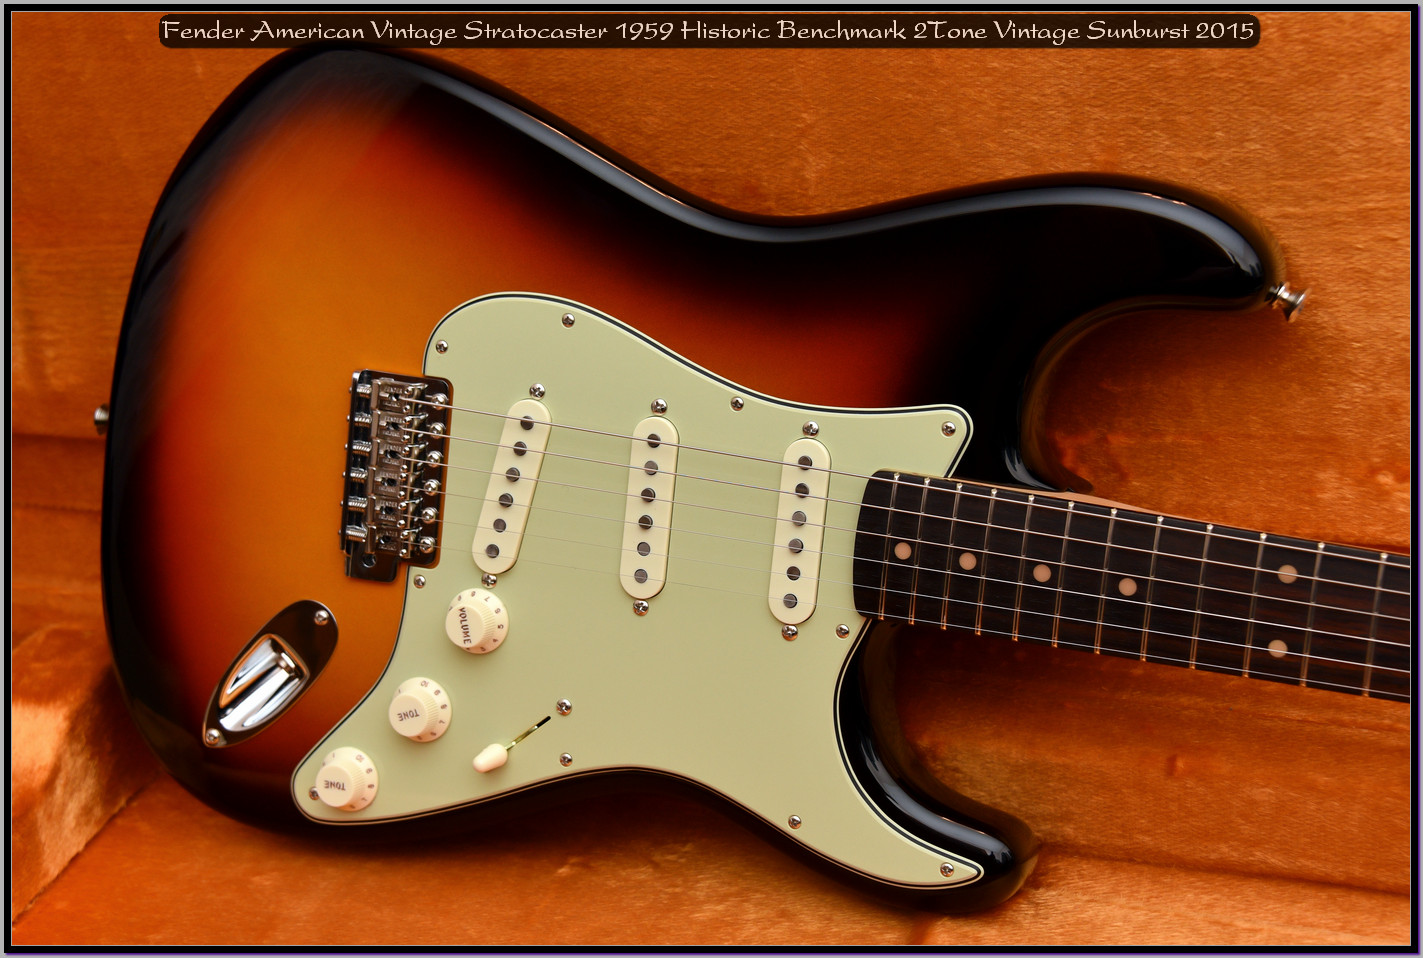 Fender American Vintage Stratocaster 1959 Historic Benchmark 2Tone Vintage Sunburst 2015 32_x1400.jpg